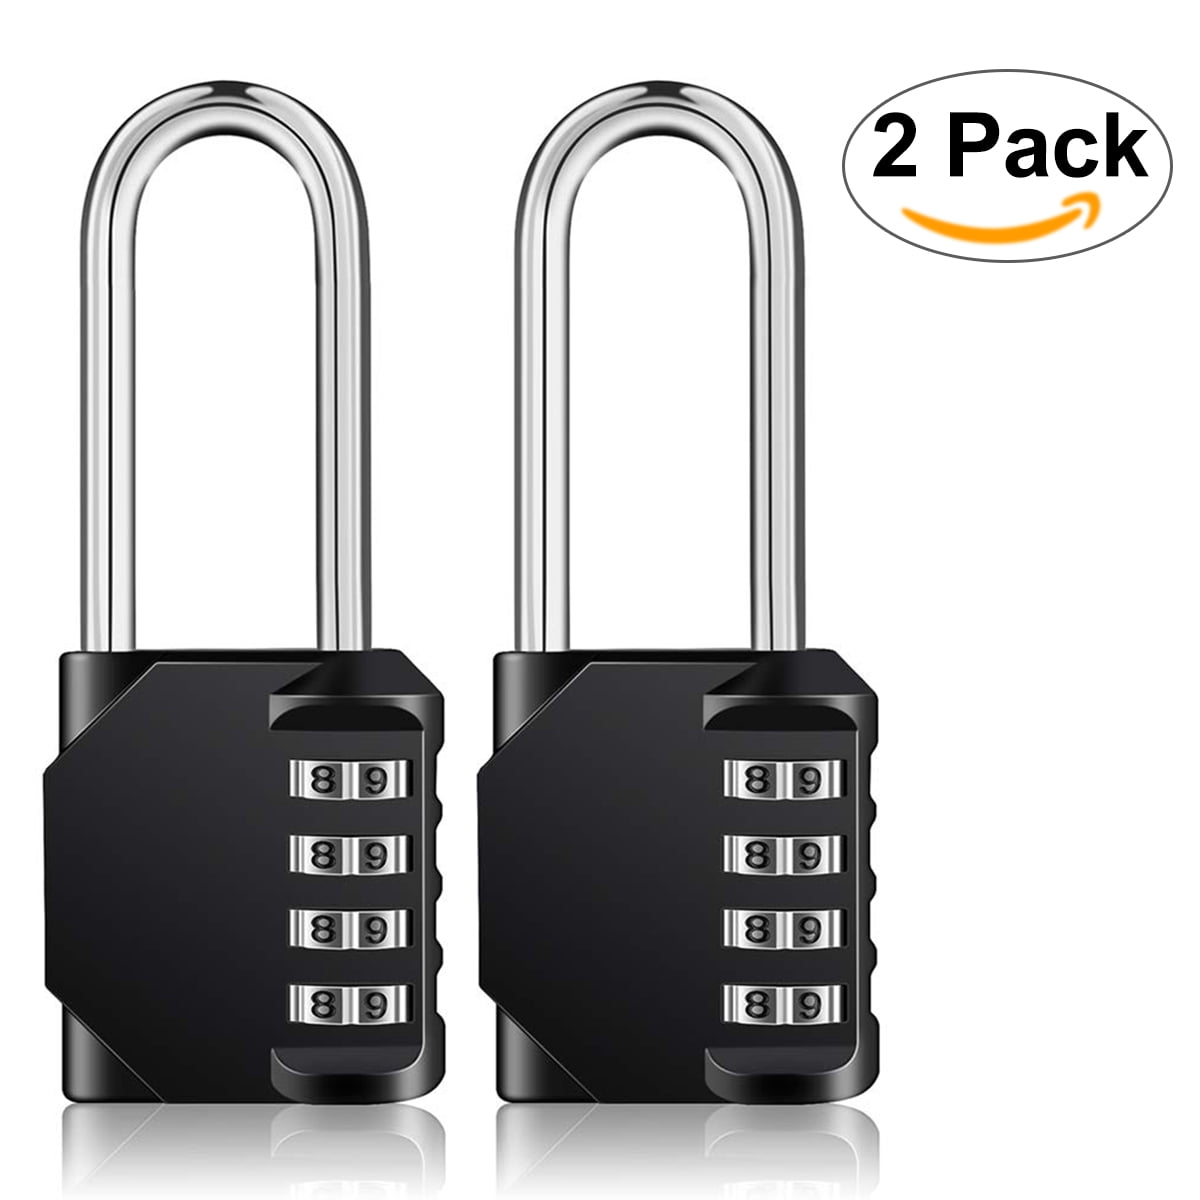 DonJon Padlock,2 Pack Combination Lock 3 Digit Padlock for Gym,Outdoor&School Locker,Fence,Hasp and Storage Black 